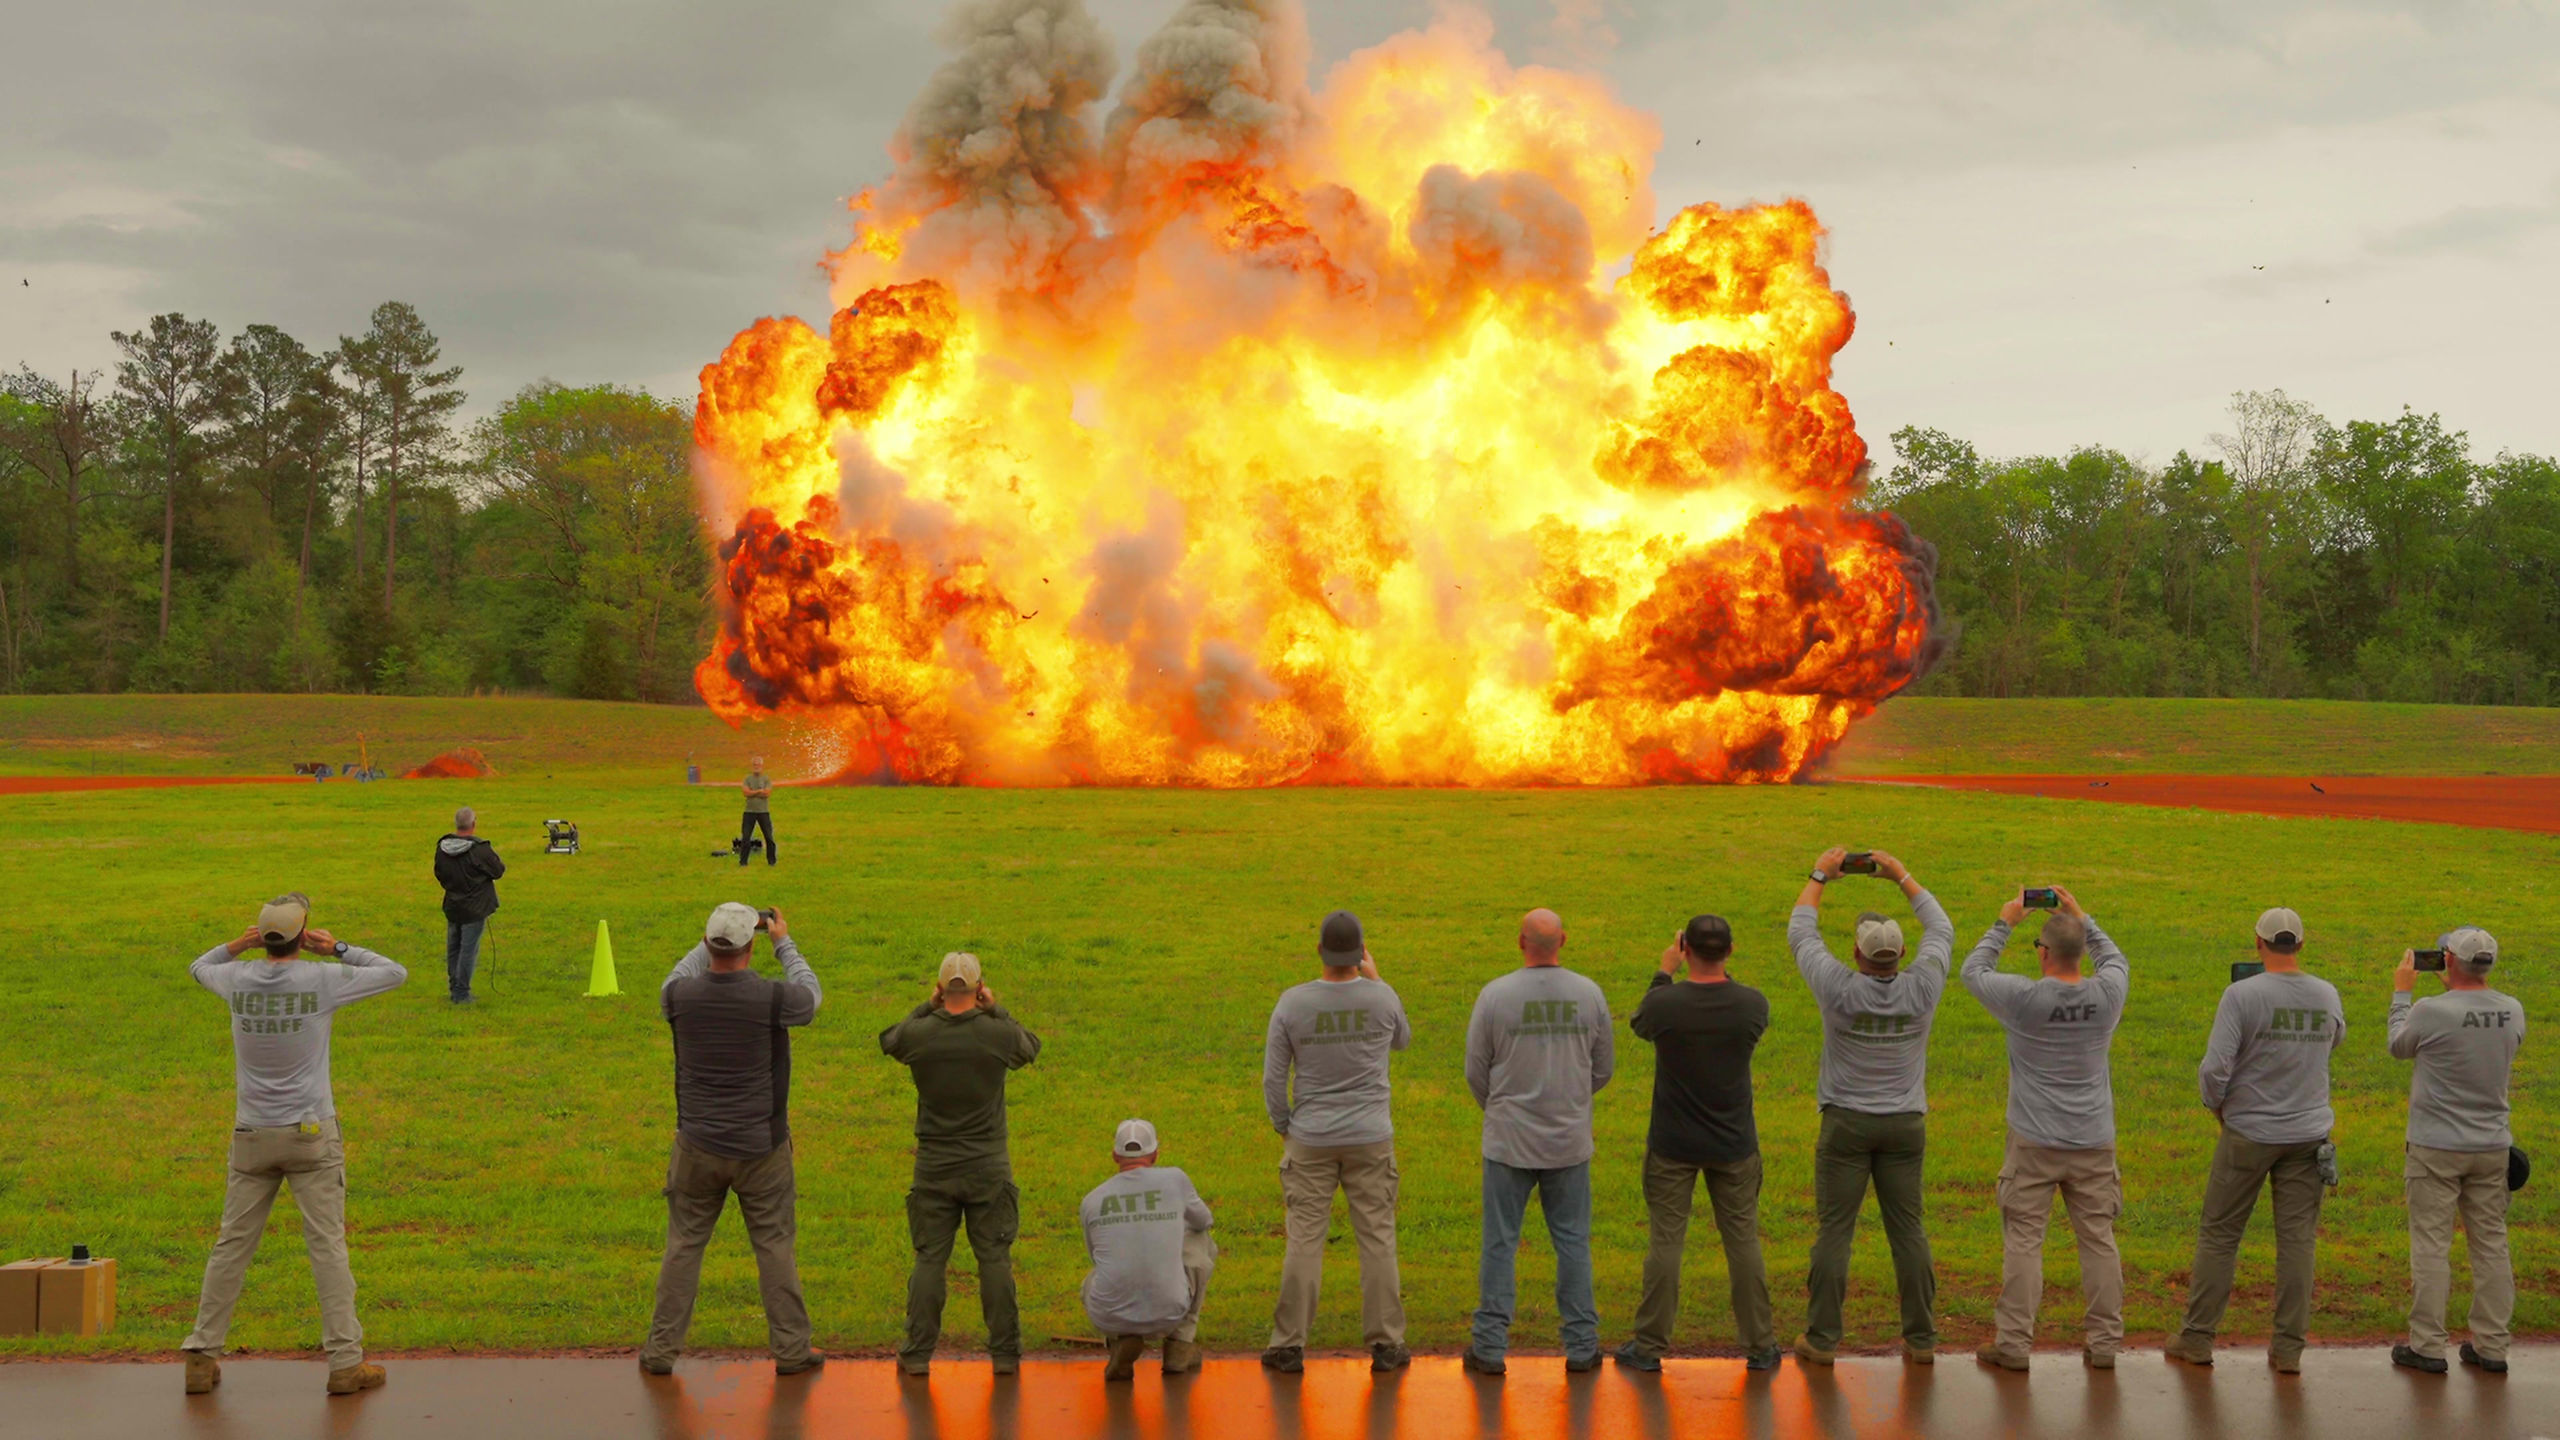 Explosion demonstration